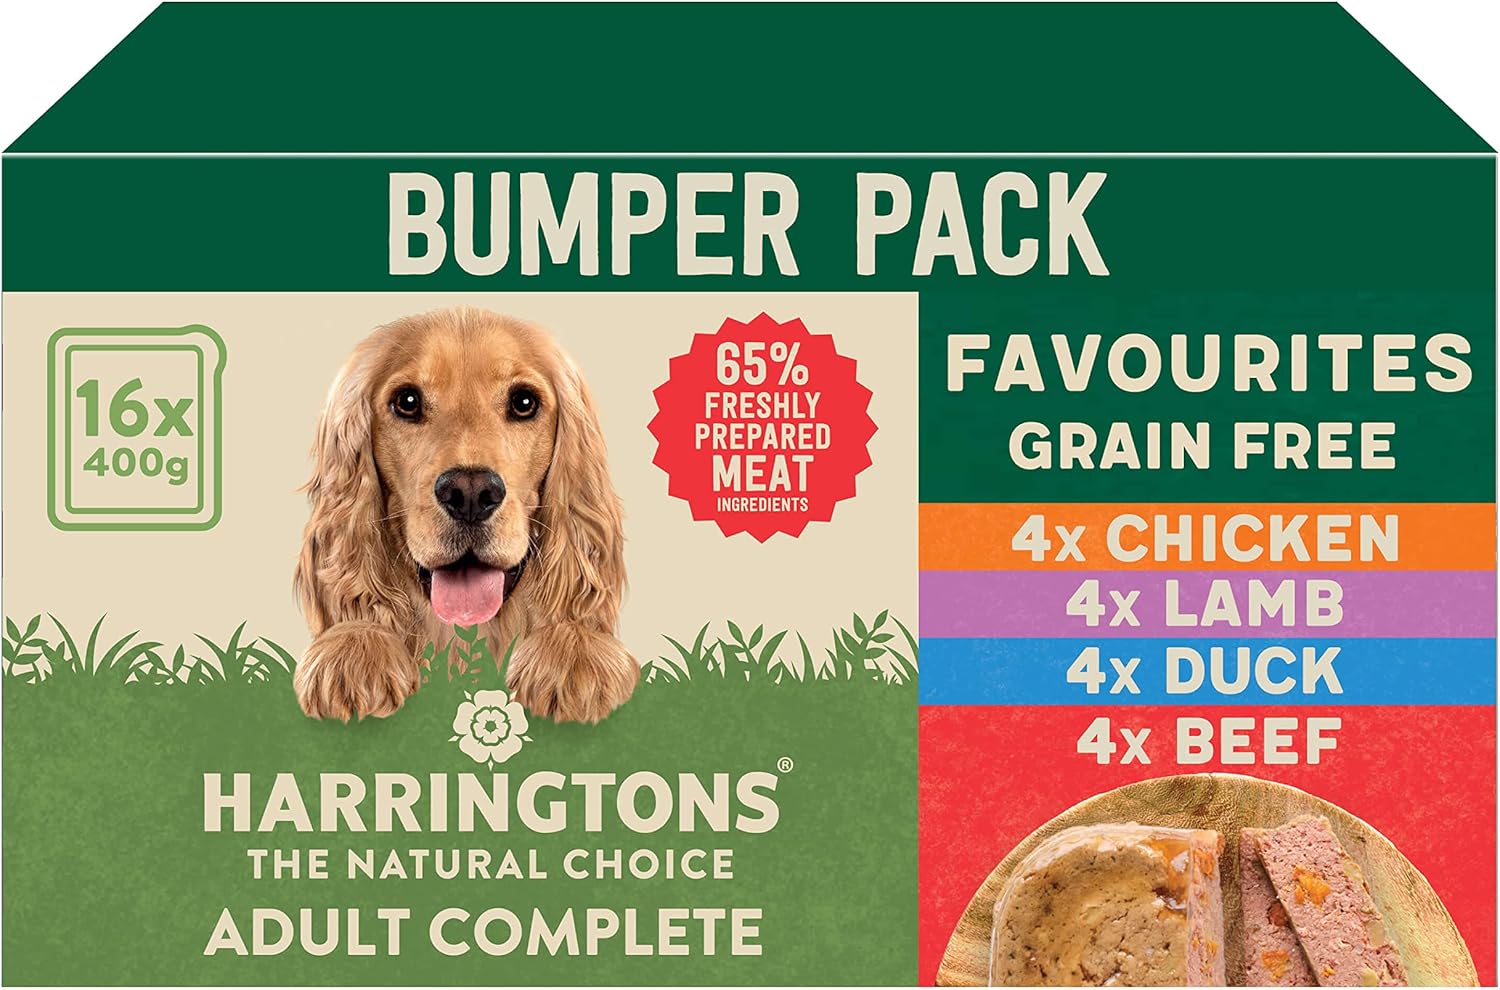 Harringtons Grain Free Hypoallergenic Wet Dog Food Favourites Pack 16x400g - Chicken, Lamb, Beef & Duck - All Natural Ingredients?HARRWBULKW-C400